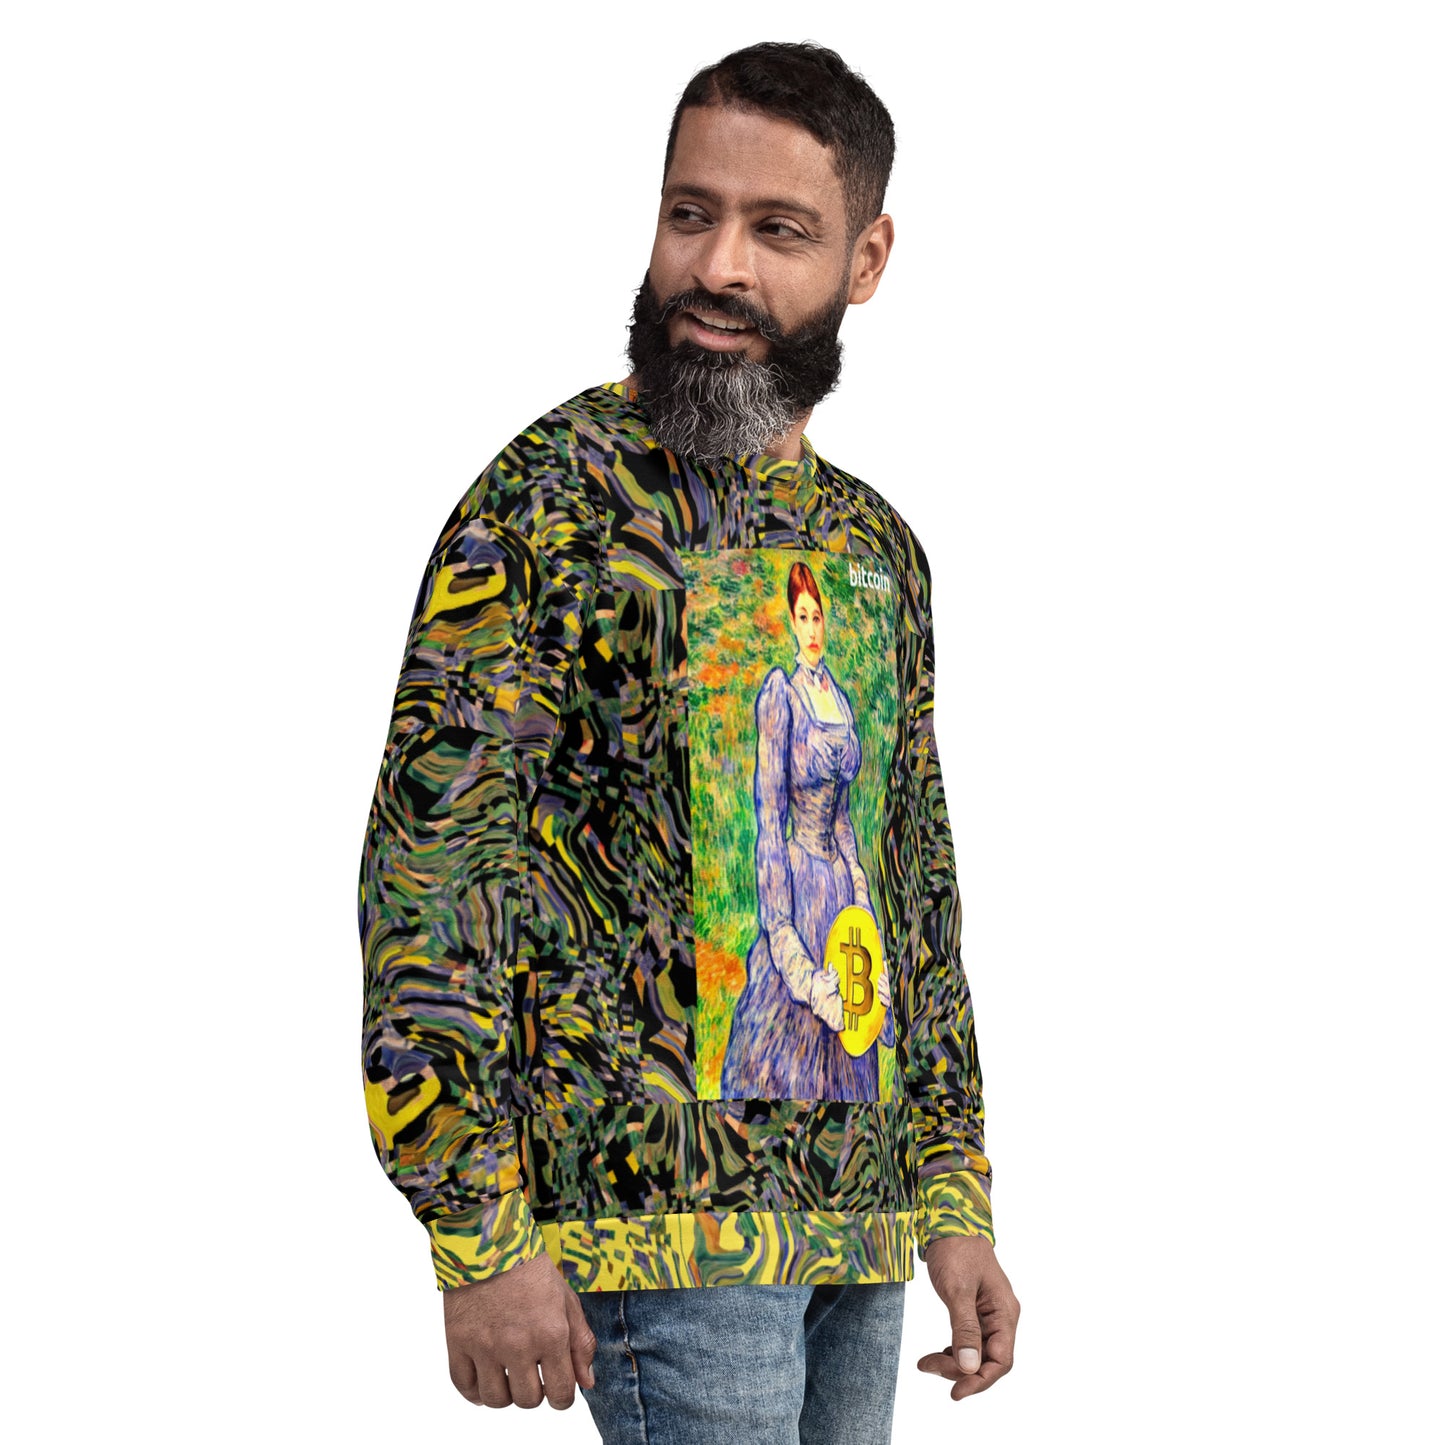 Bitcoin Masterpiece Sweatshirt